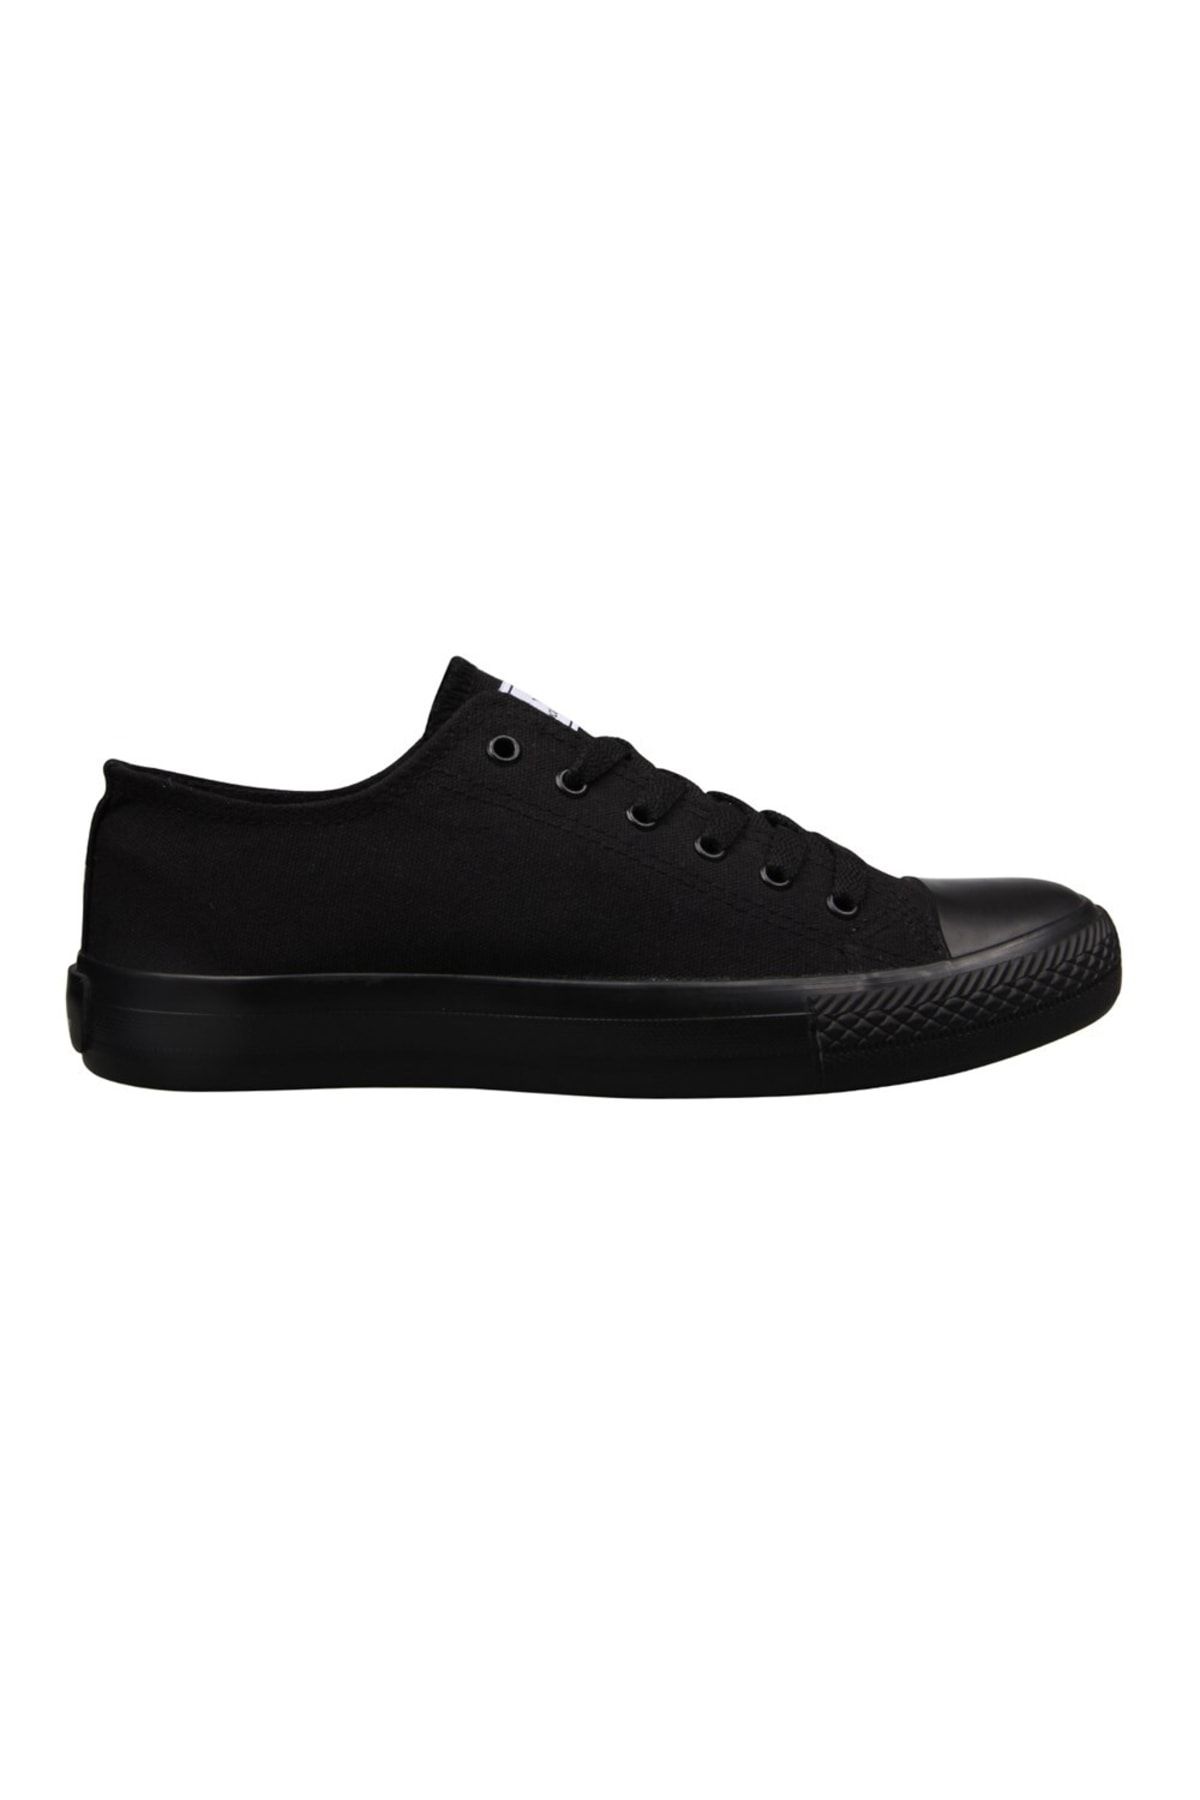 MP M.p 1842 Converse Unısex Siyah Beyaz Sneakers Ayakkabı